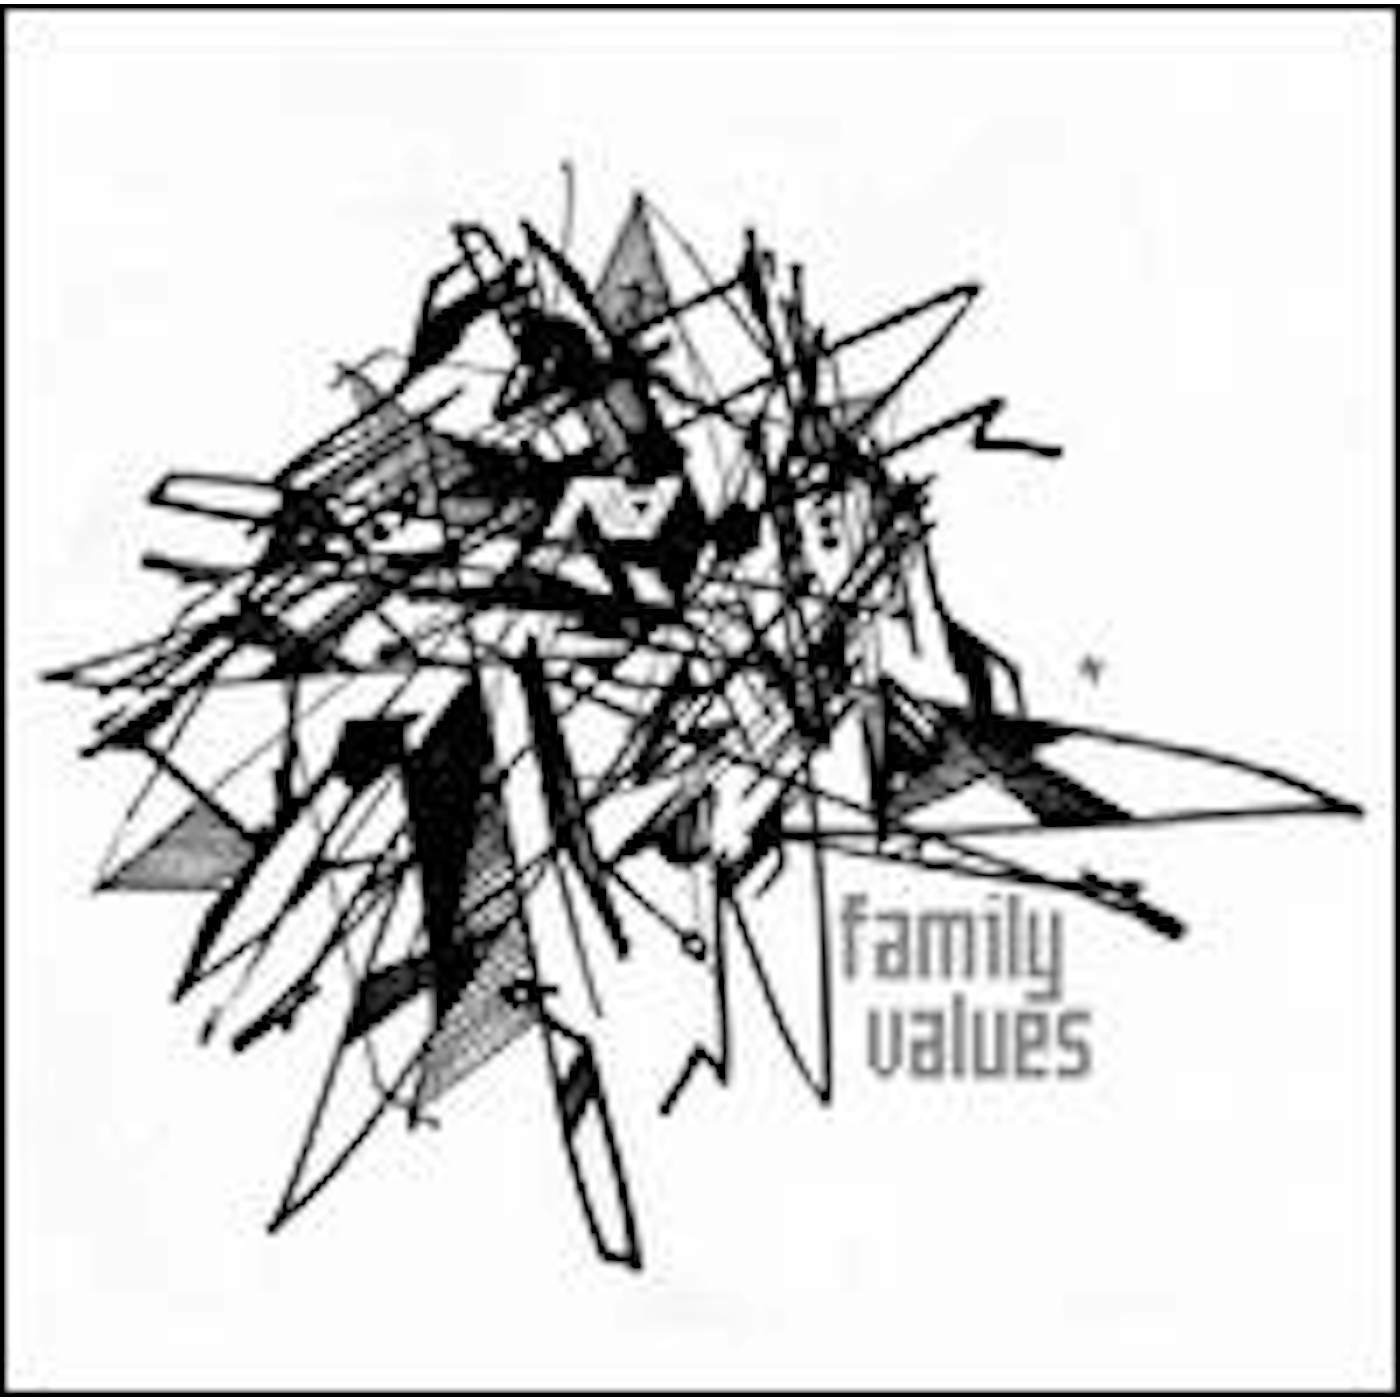 Family Values Tour  FAMILY VALUES / VARIOUS Vinyl Record